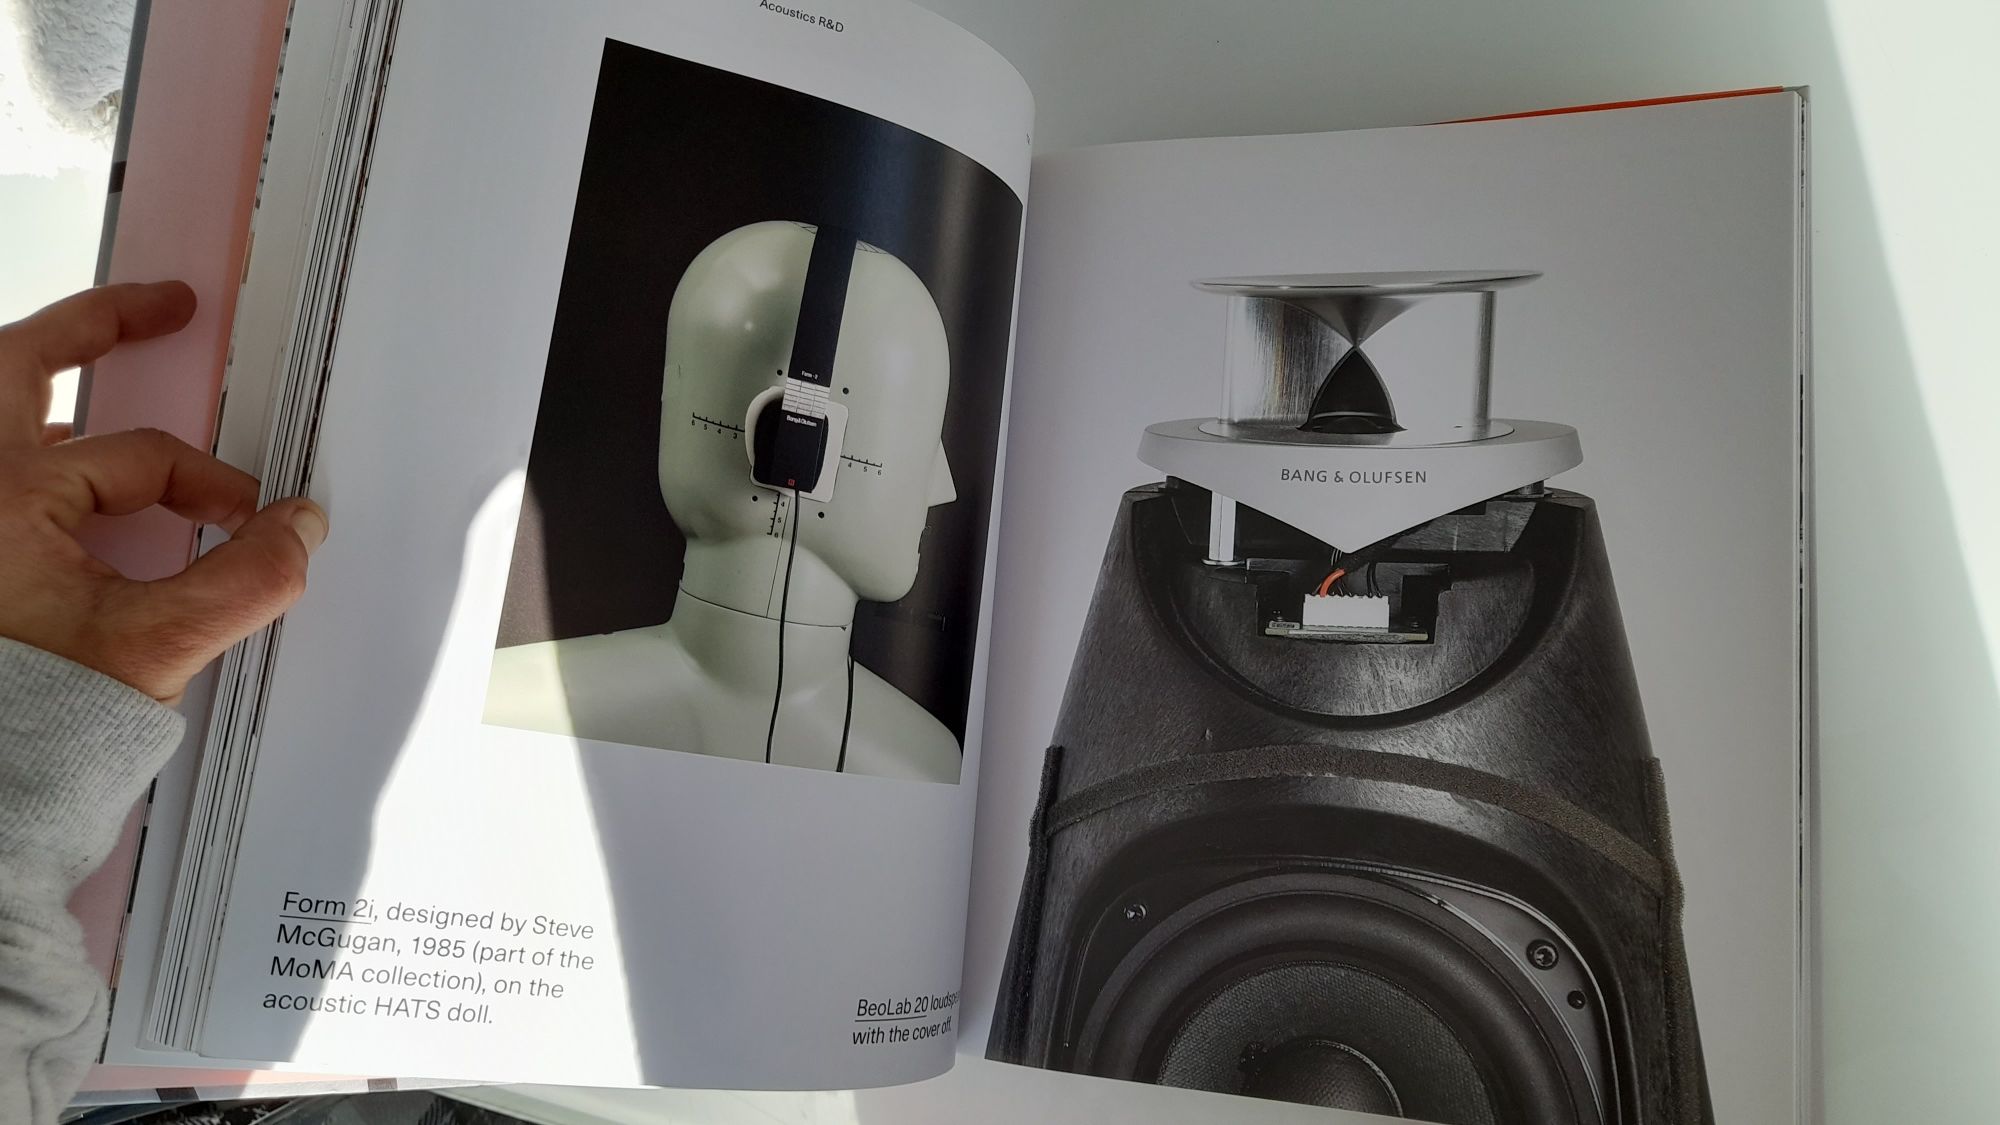 Livro Thames & Hudson The art of impossible the Bang & Olufsen Design